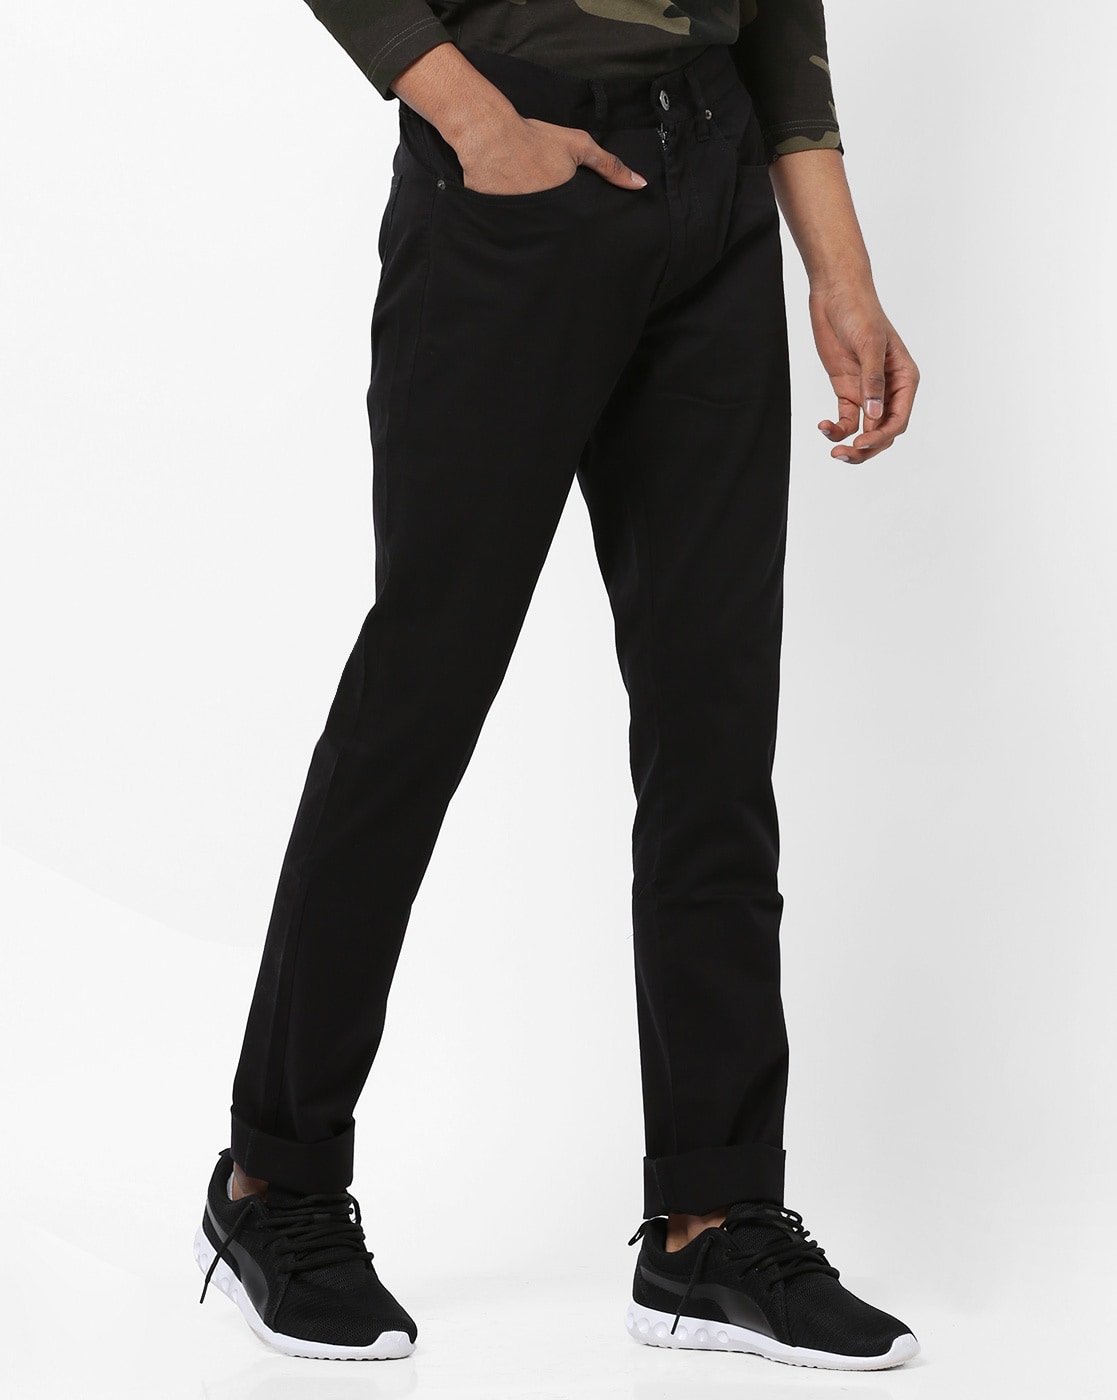 Buy Black Trousers  Pants for Men by RED TAPE Online  Ajiocom